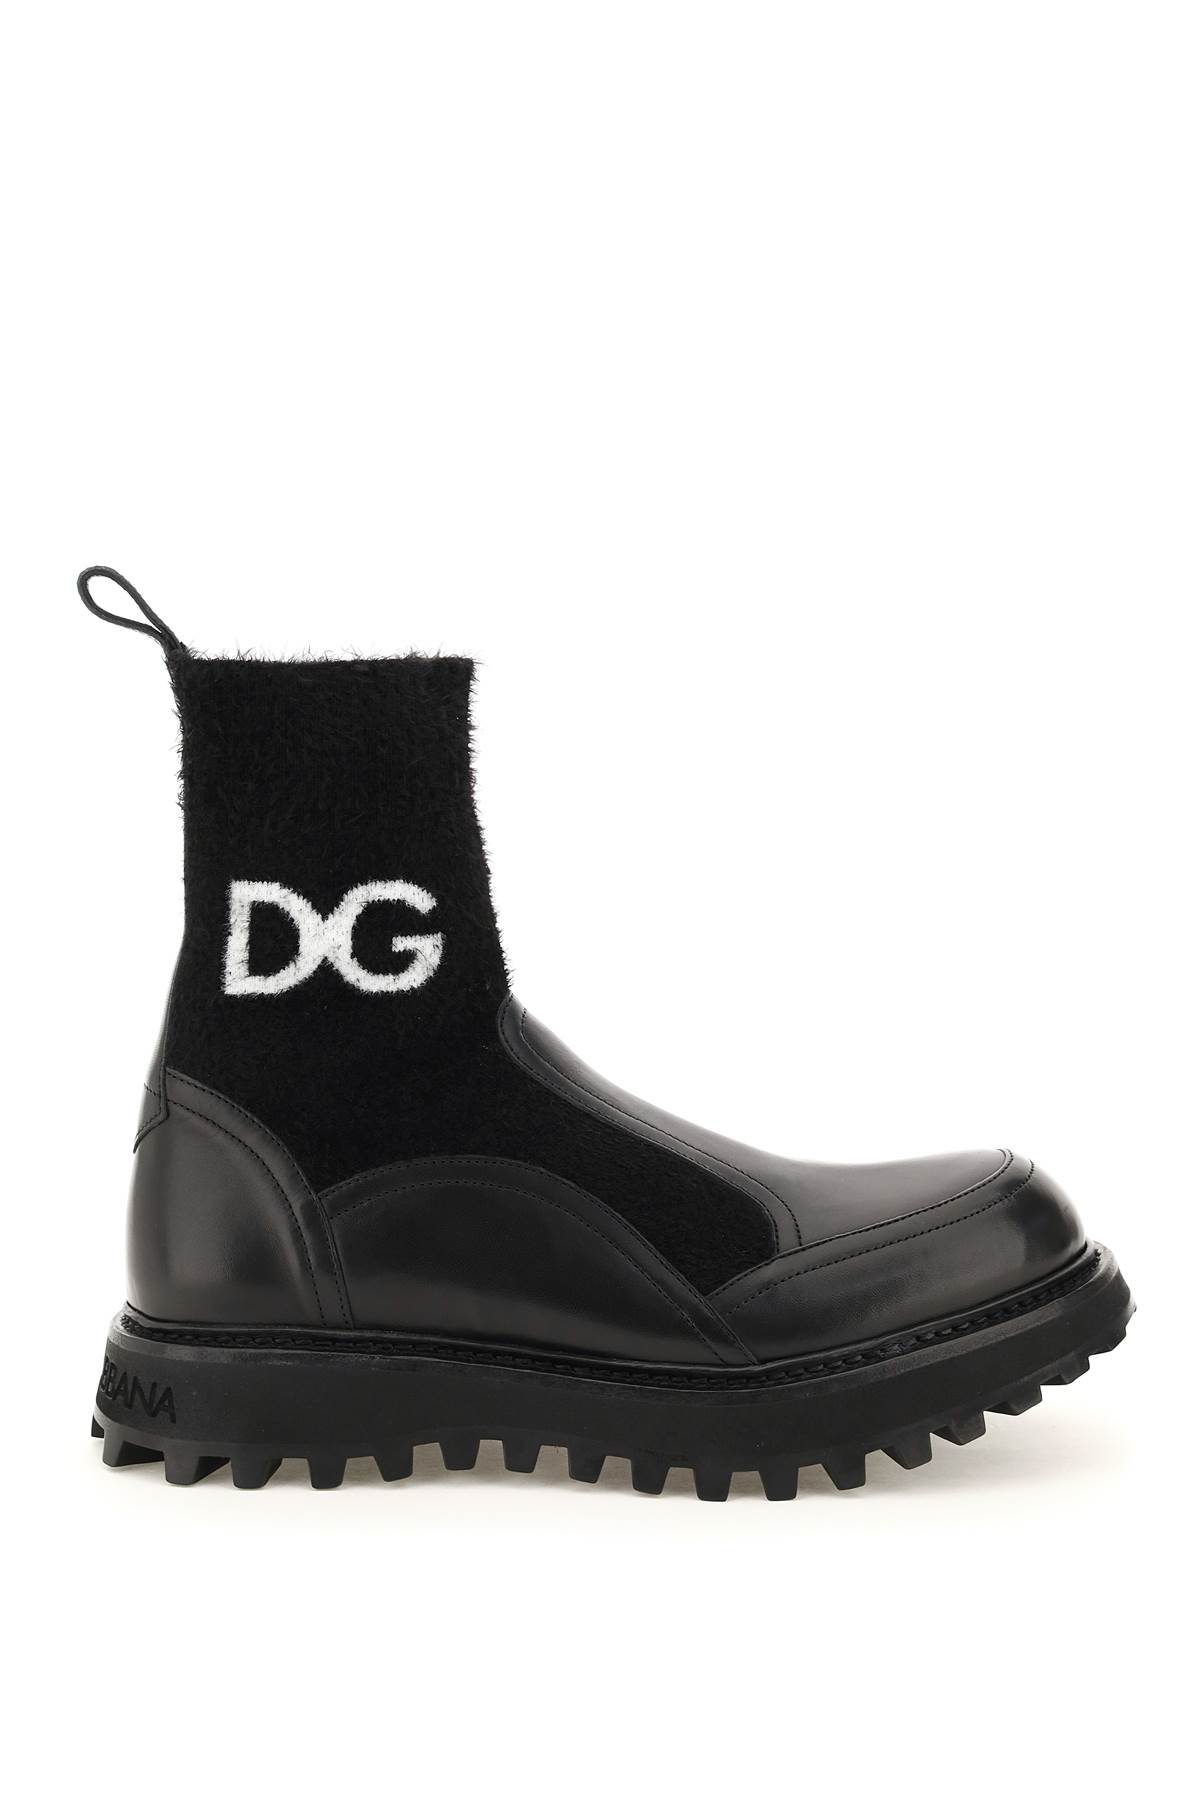 Dolce & Gabbana Logo Knit Ankle Boots